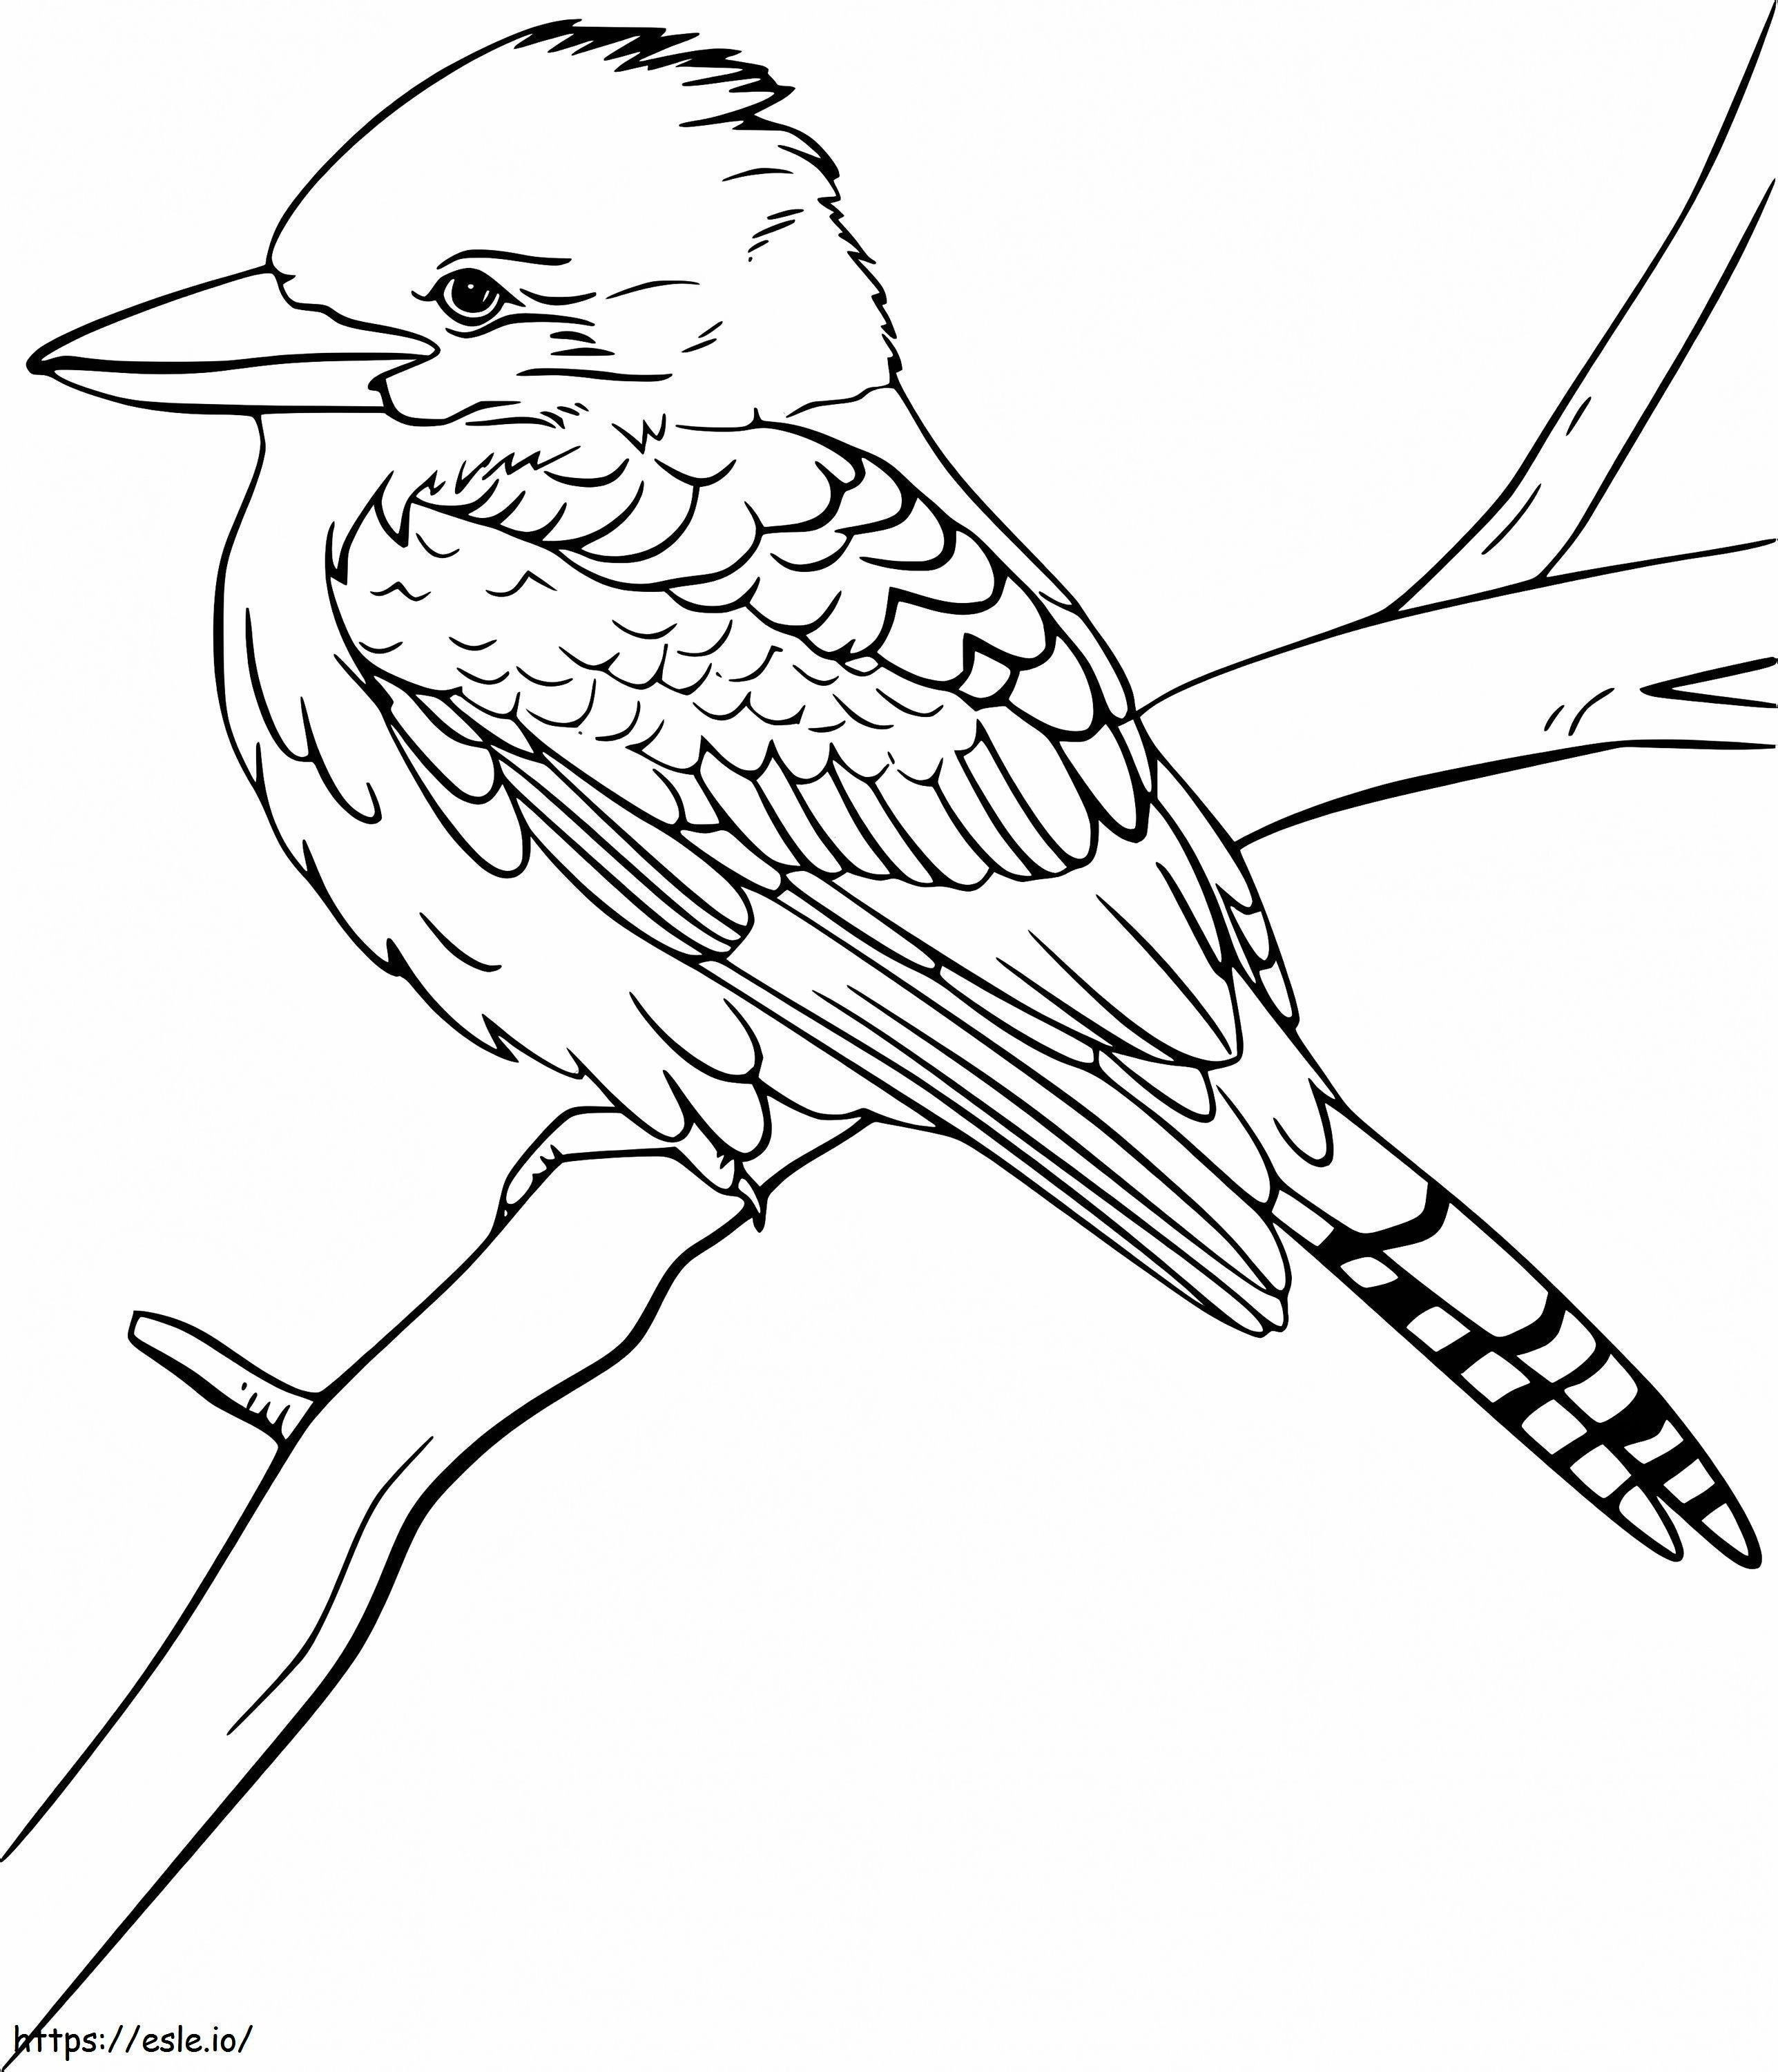 Printable Kookaburra coloring page